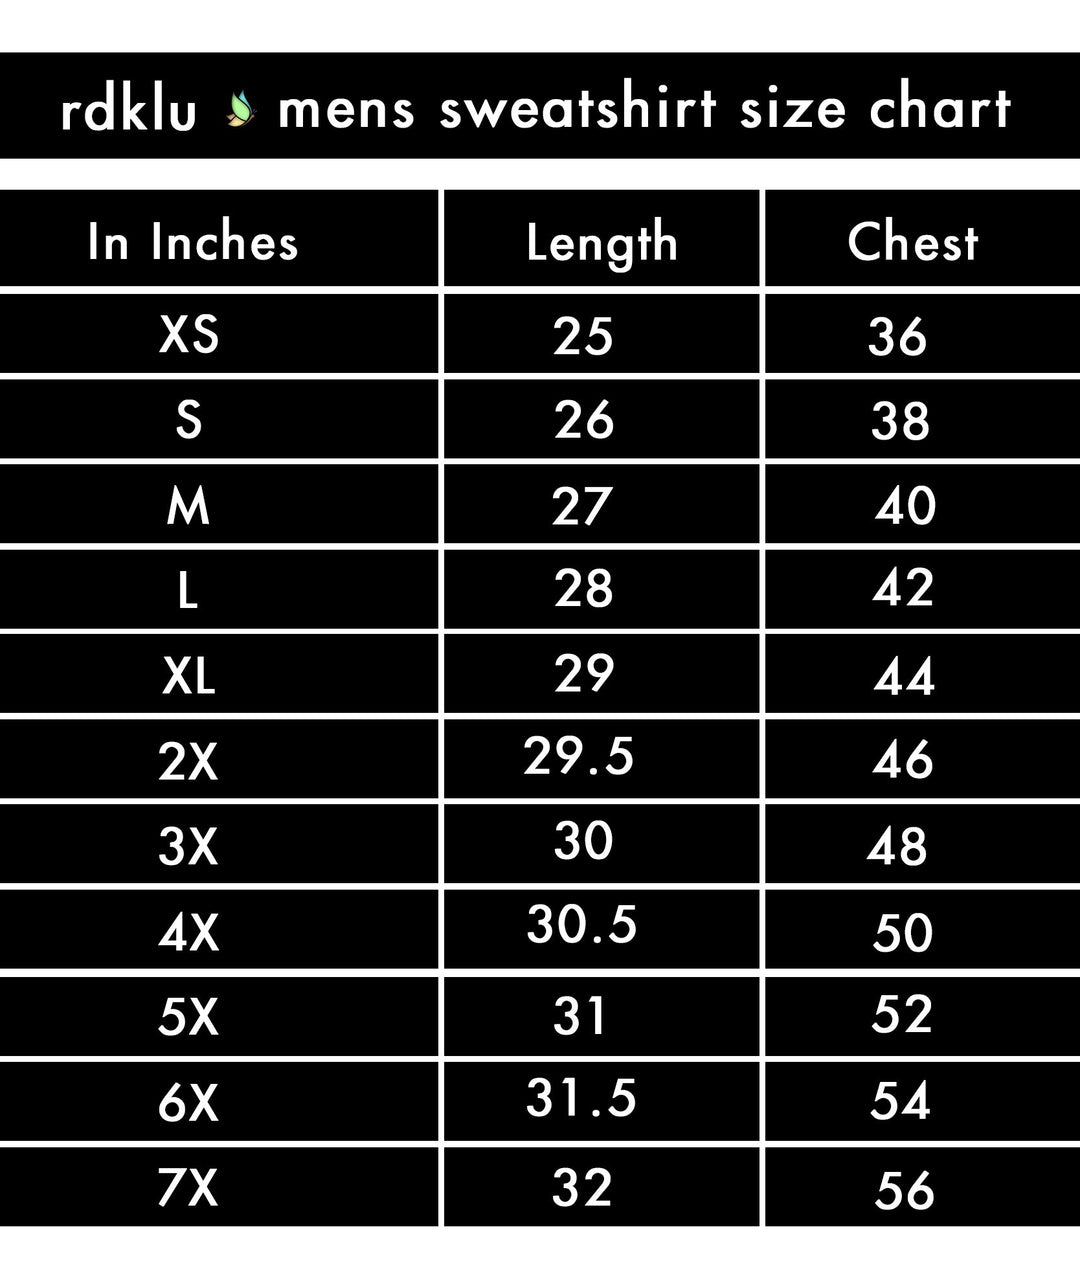 RDKLU MENS SWEATSHIRT - RDKL - Men's Sweatshirt#113